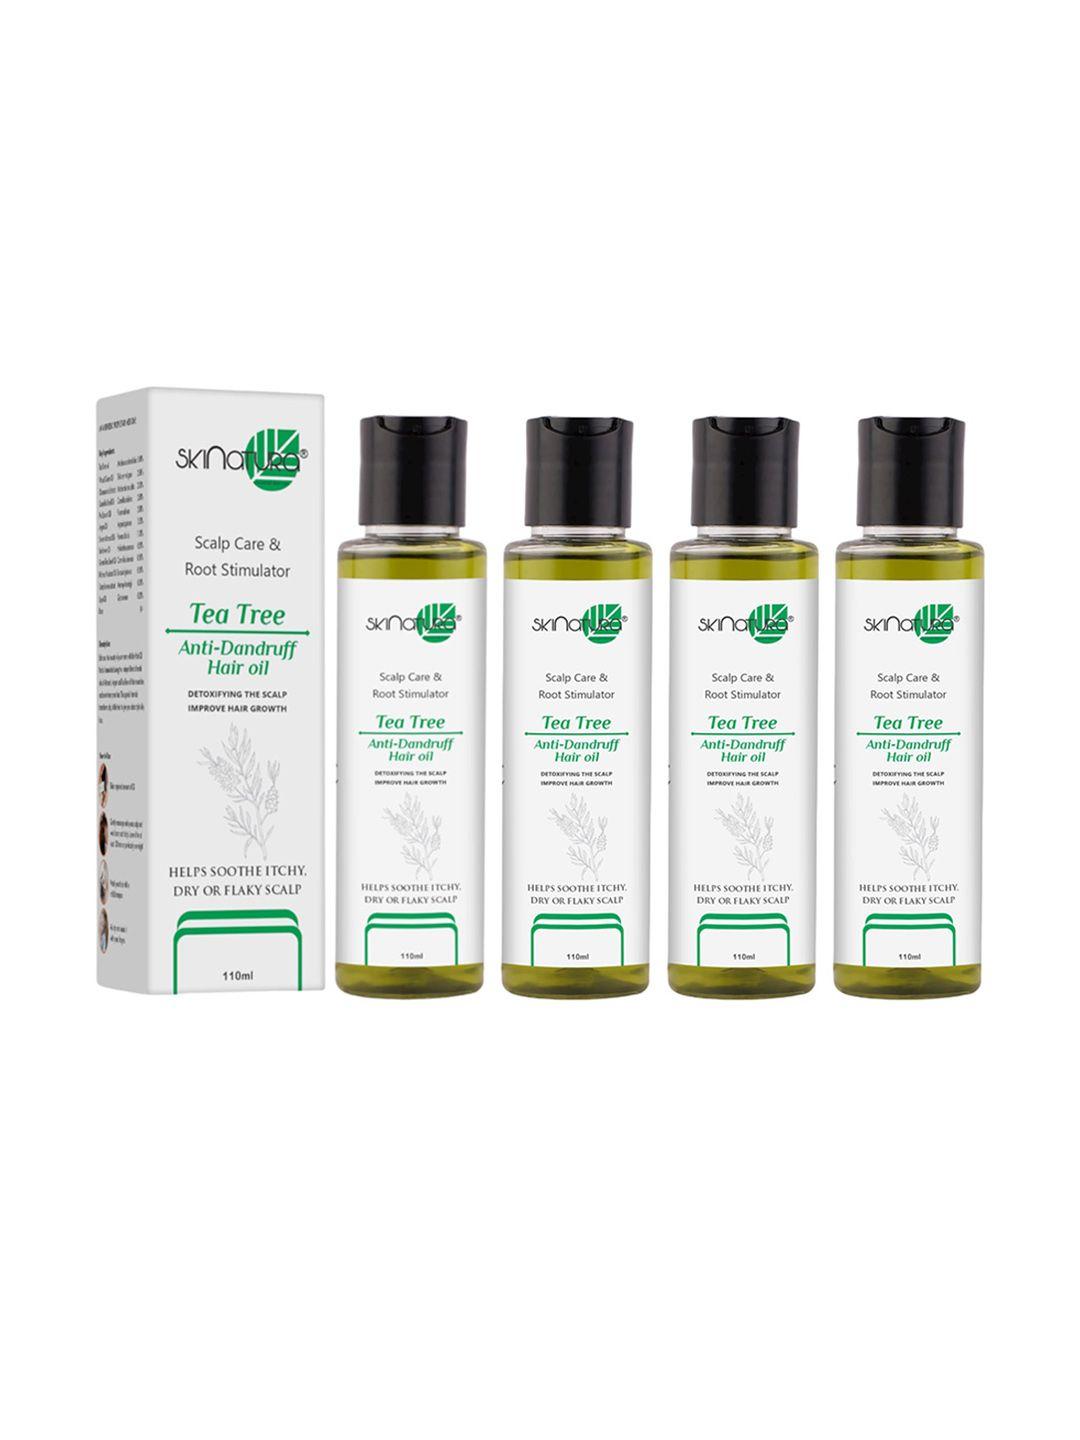 skinatura set of 4 tea tree anti-dandruff hair oil - 110ml each